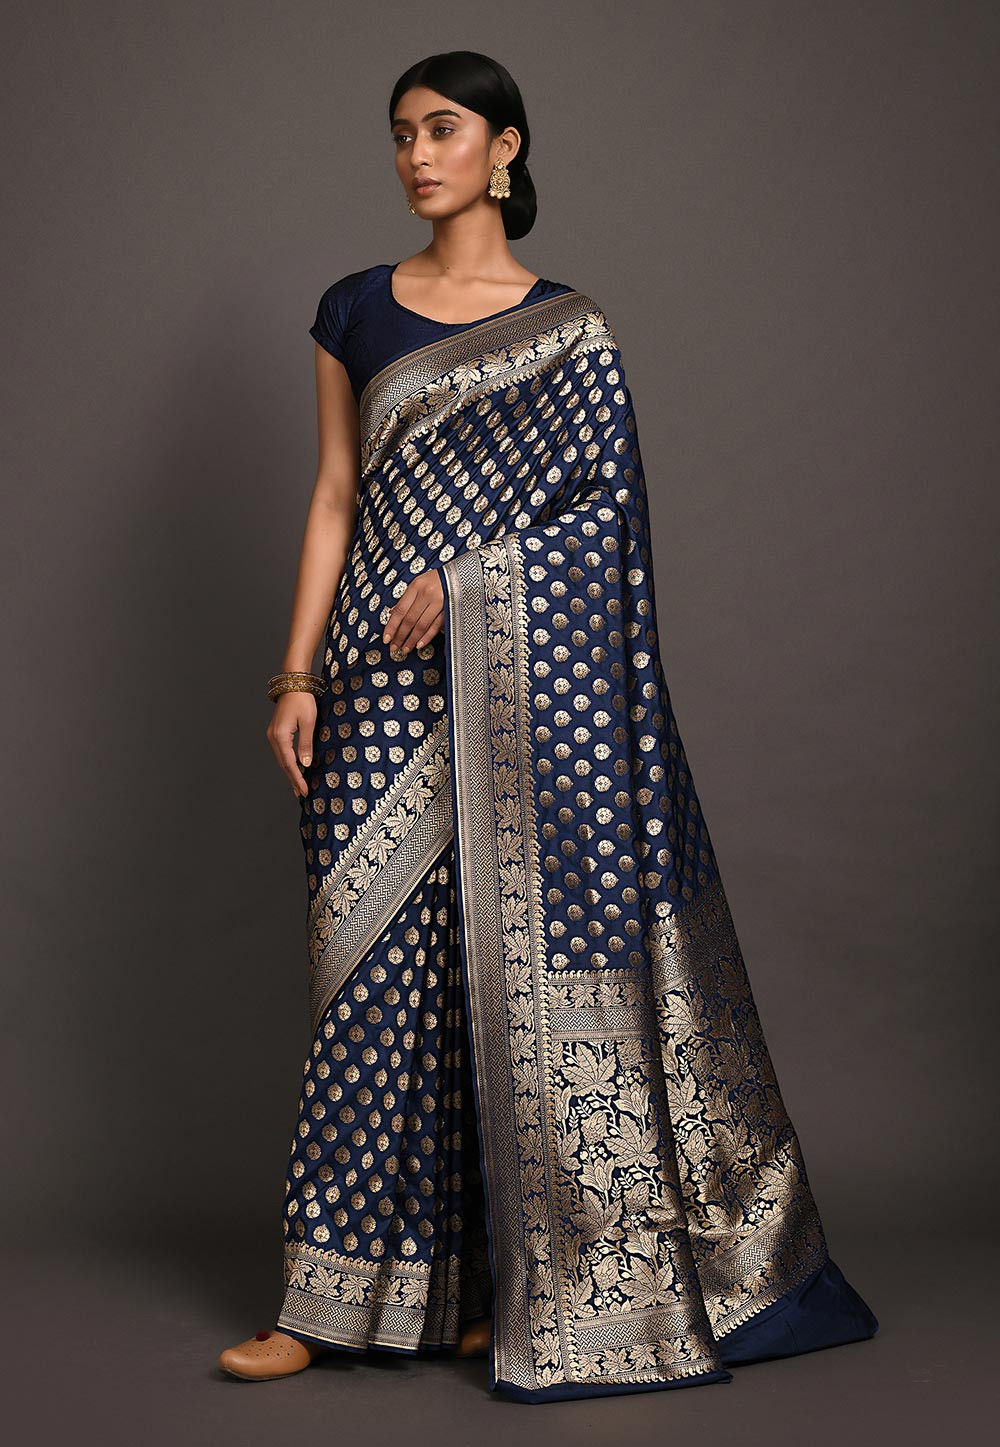 Top Modern Banarasi Saree Blouse Designs for Women [2023]